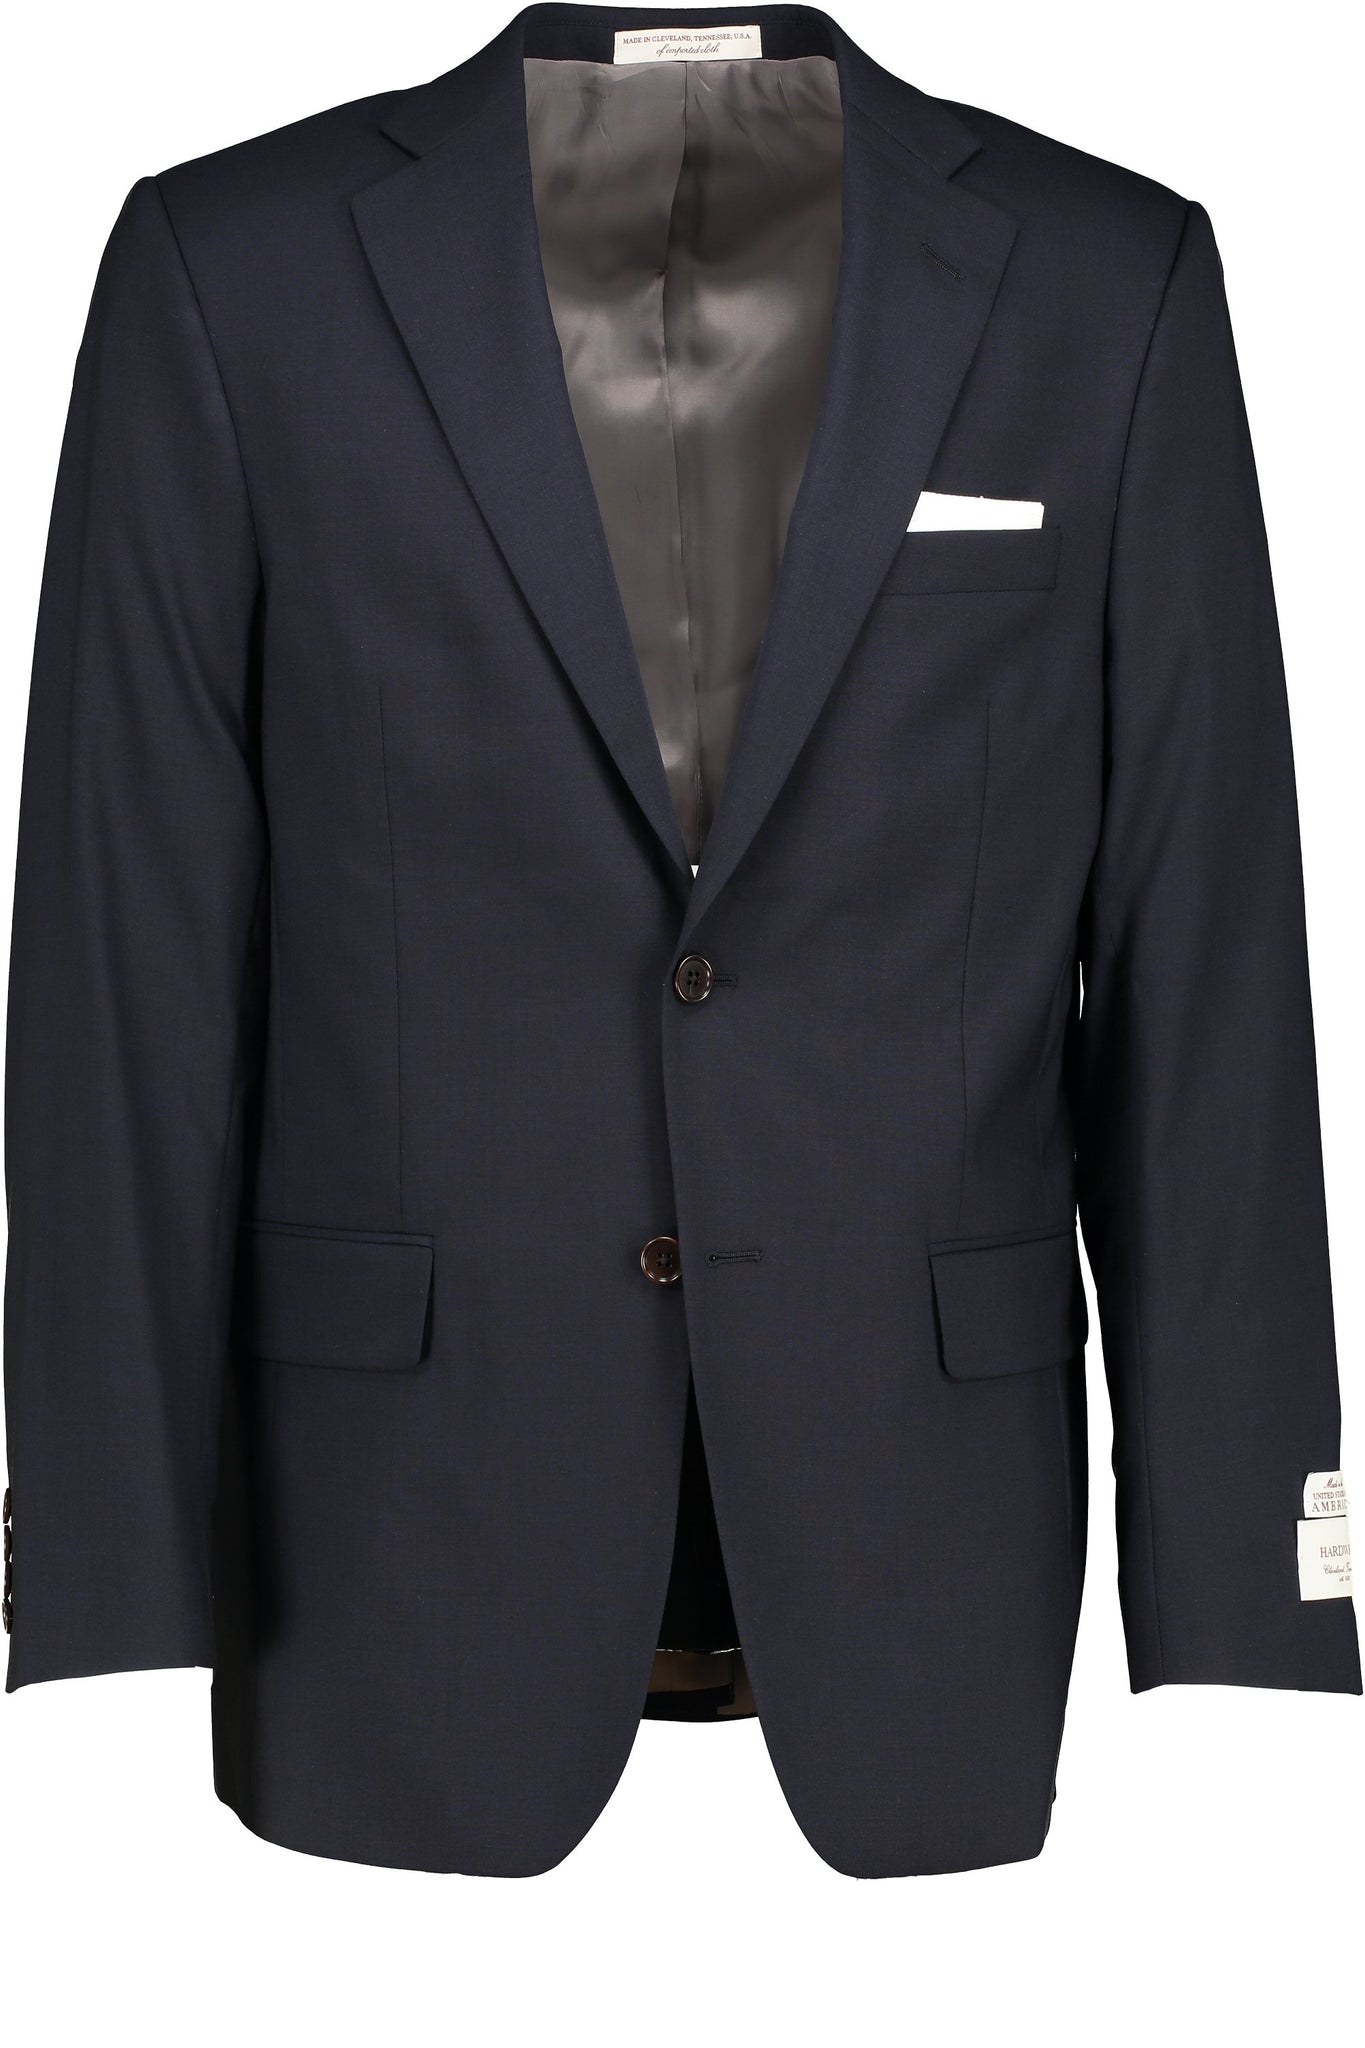 Men's Suit Separate - Coat Classic Cut - NAVY - 98/2 WOOL/LYCRA